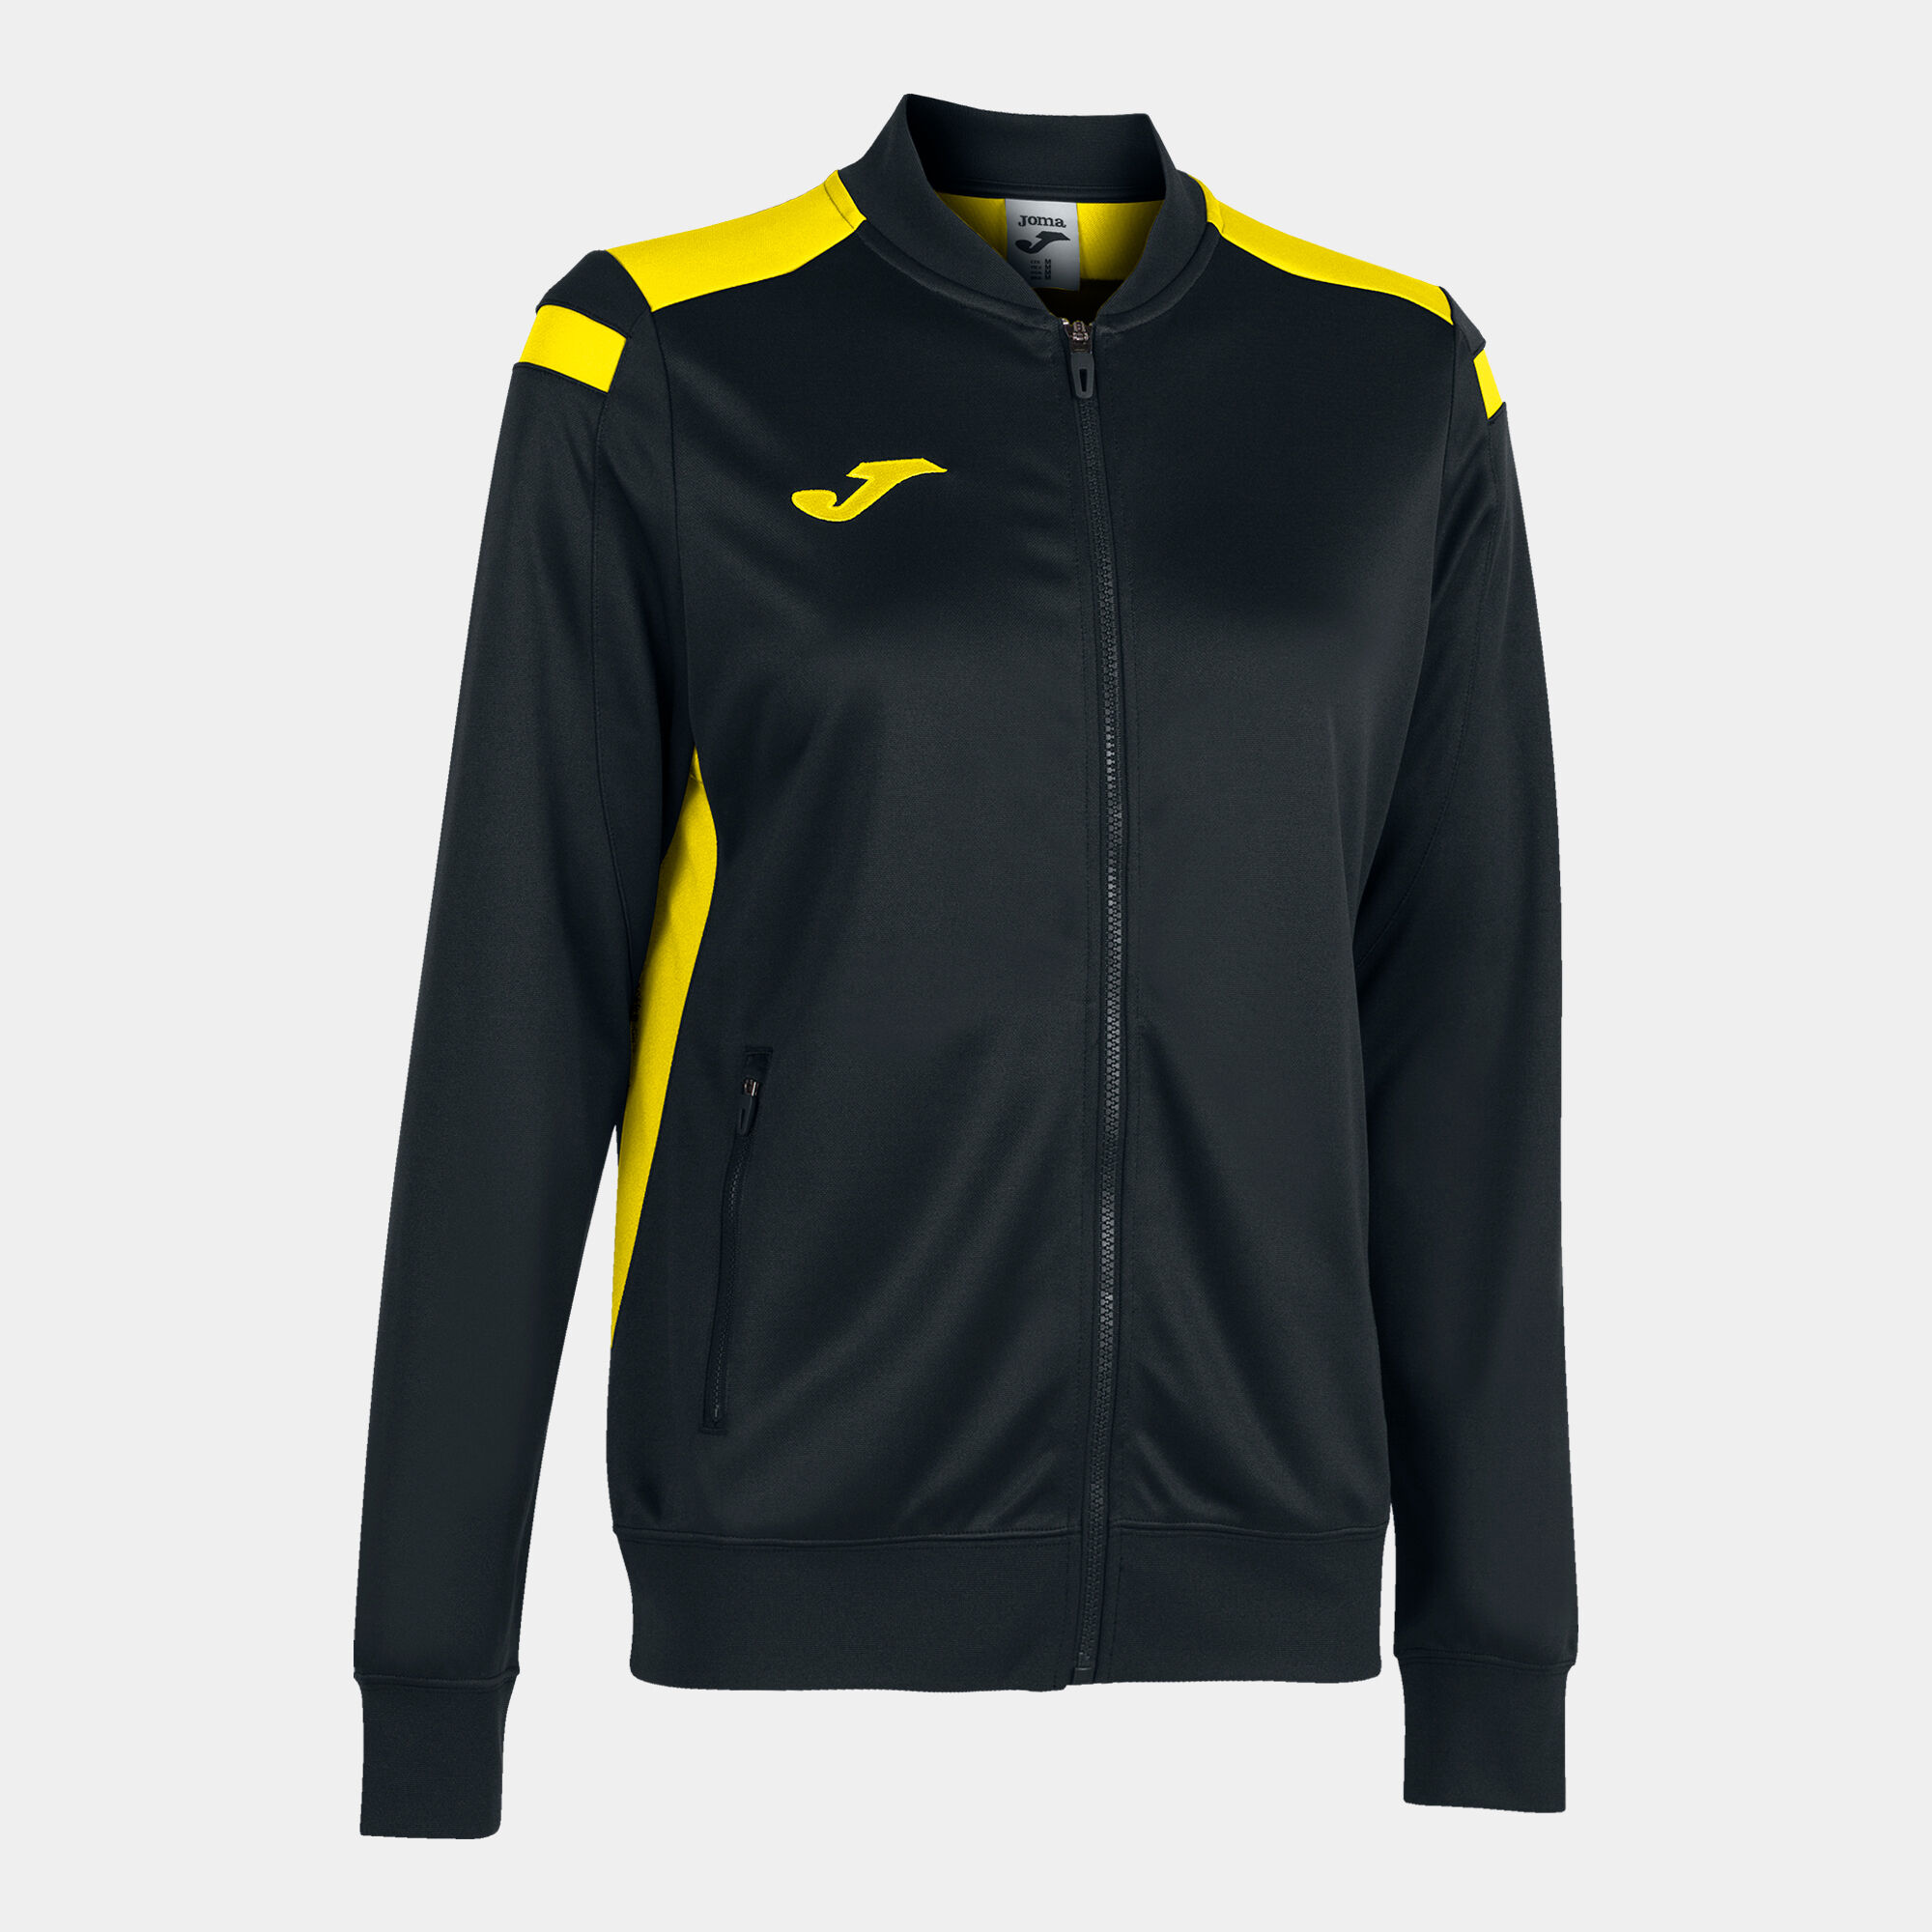 Jachetă damă Championship VI negru galben